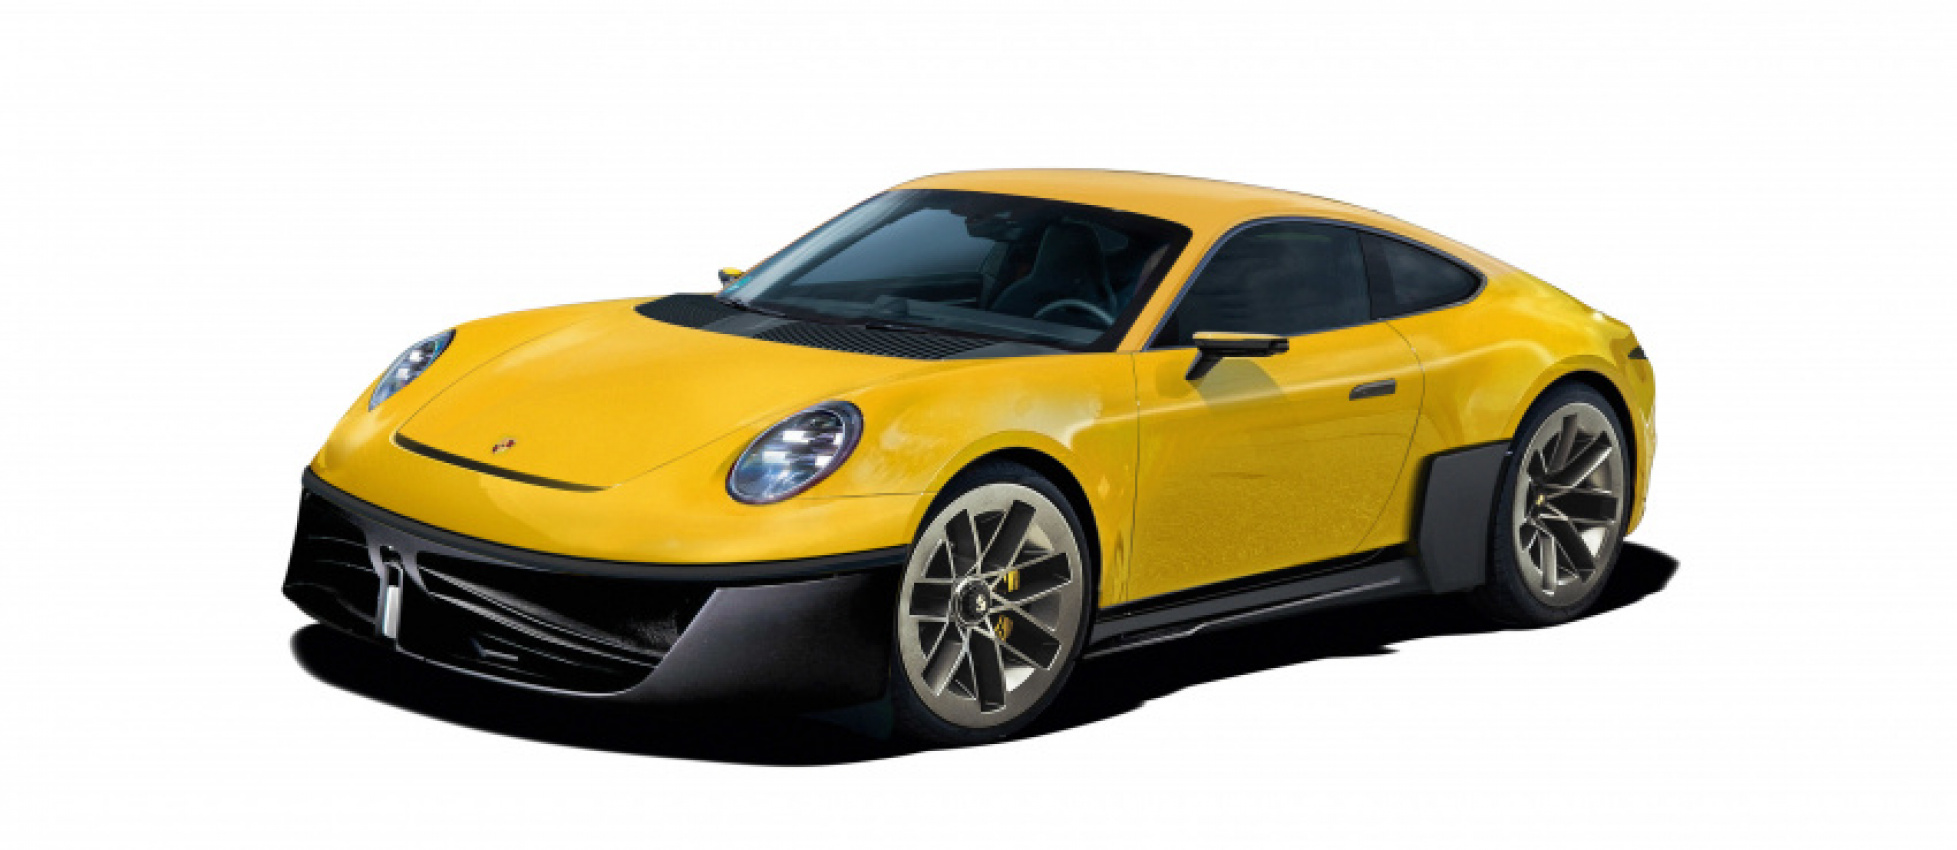 Porsche 911 GT3 R Rennsport, Honda Prologue, 2024 Ford F-150 Lightning  Flash, Forza Motorsport: Rambling About Cars 144